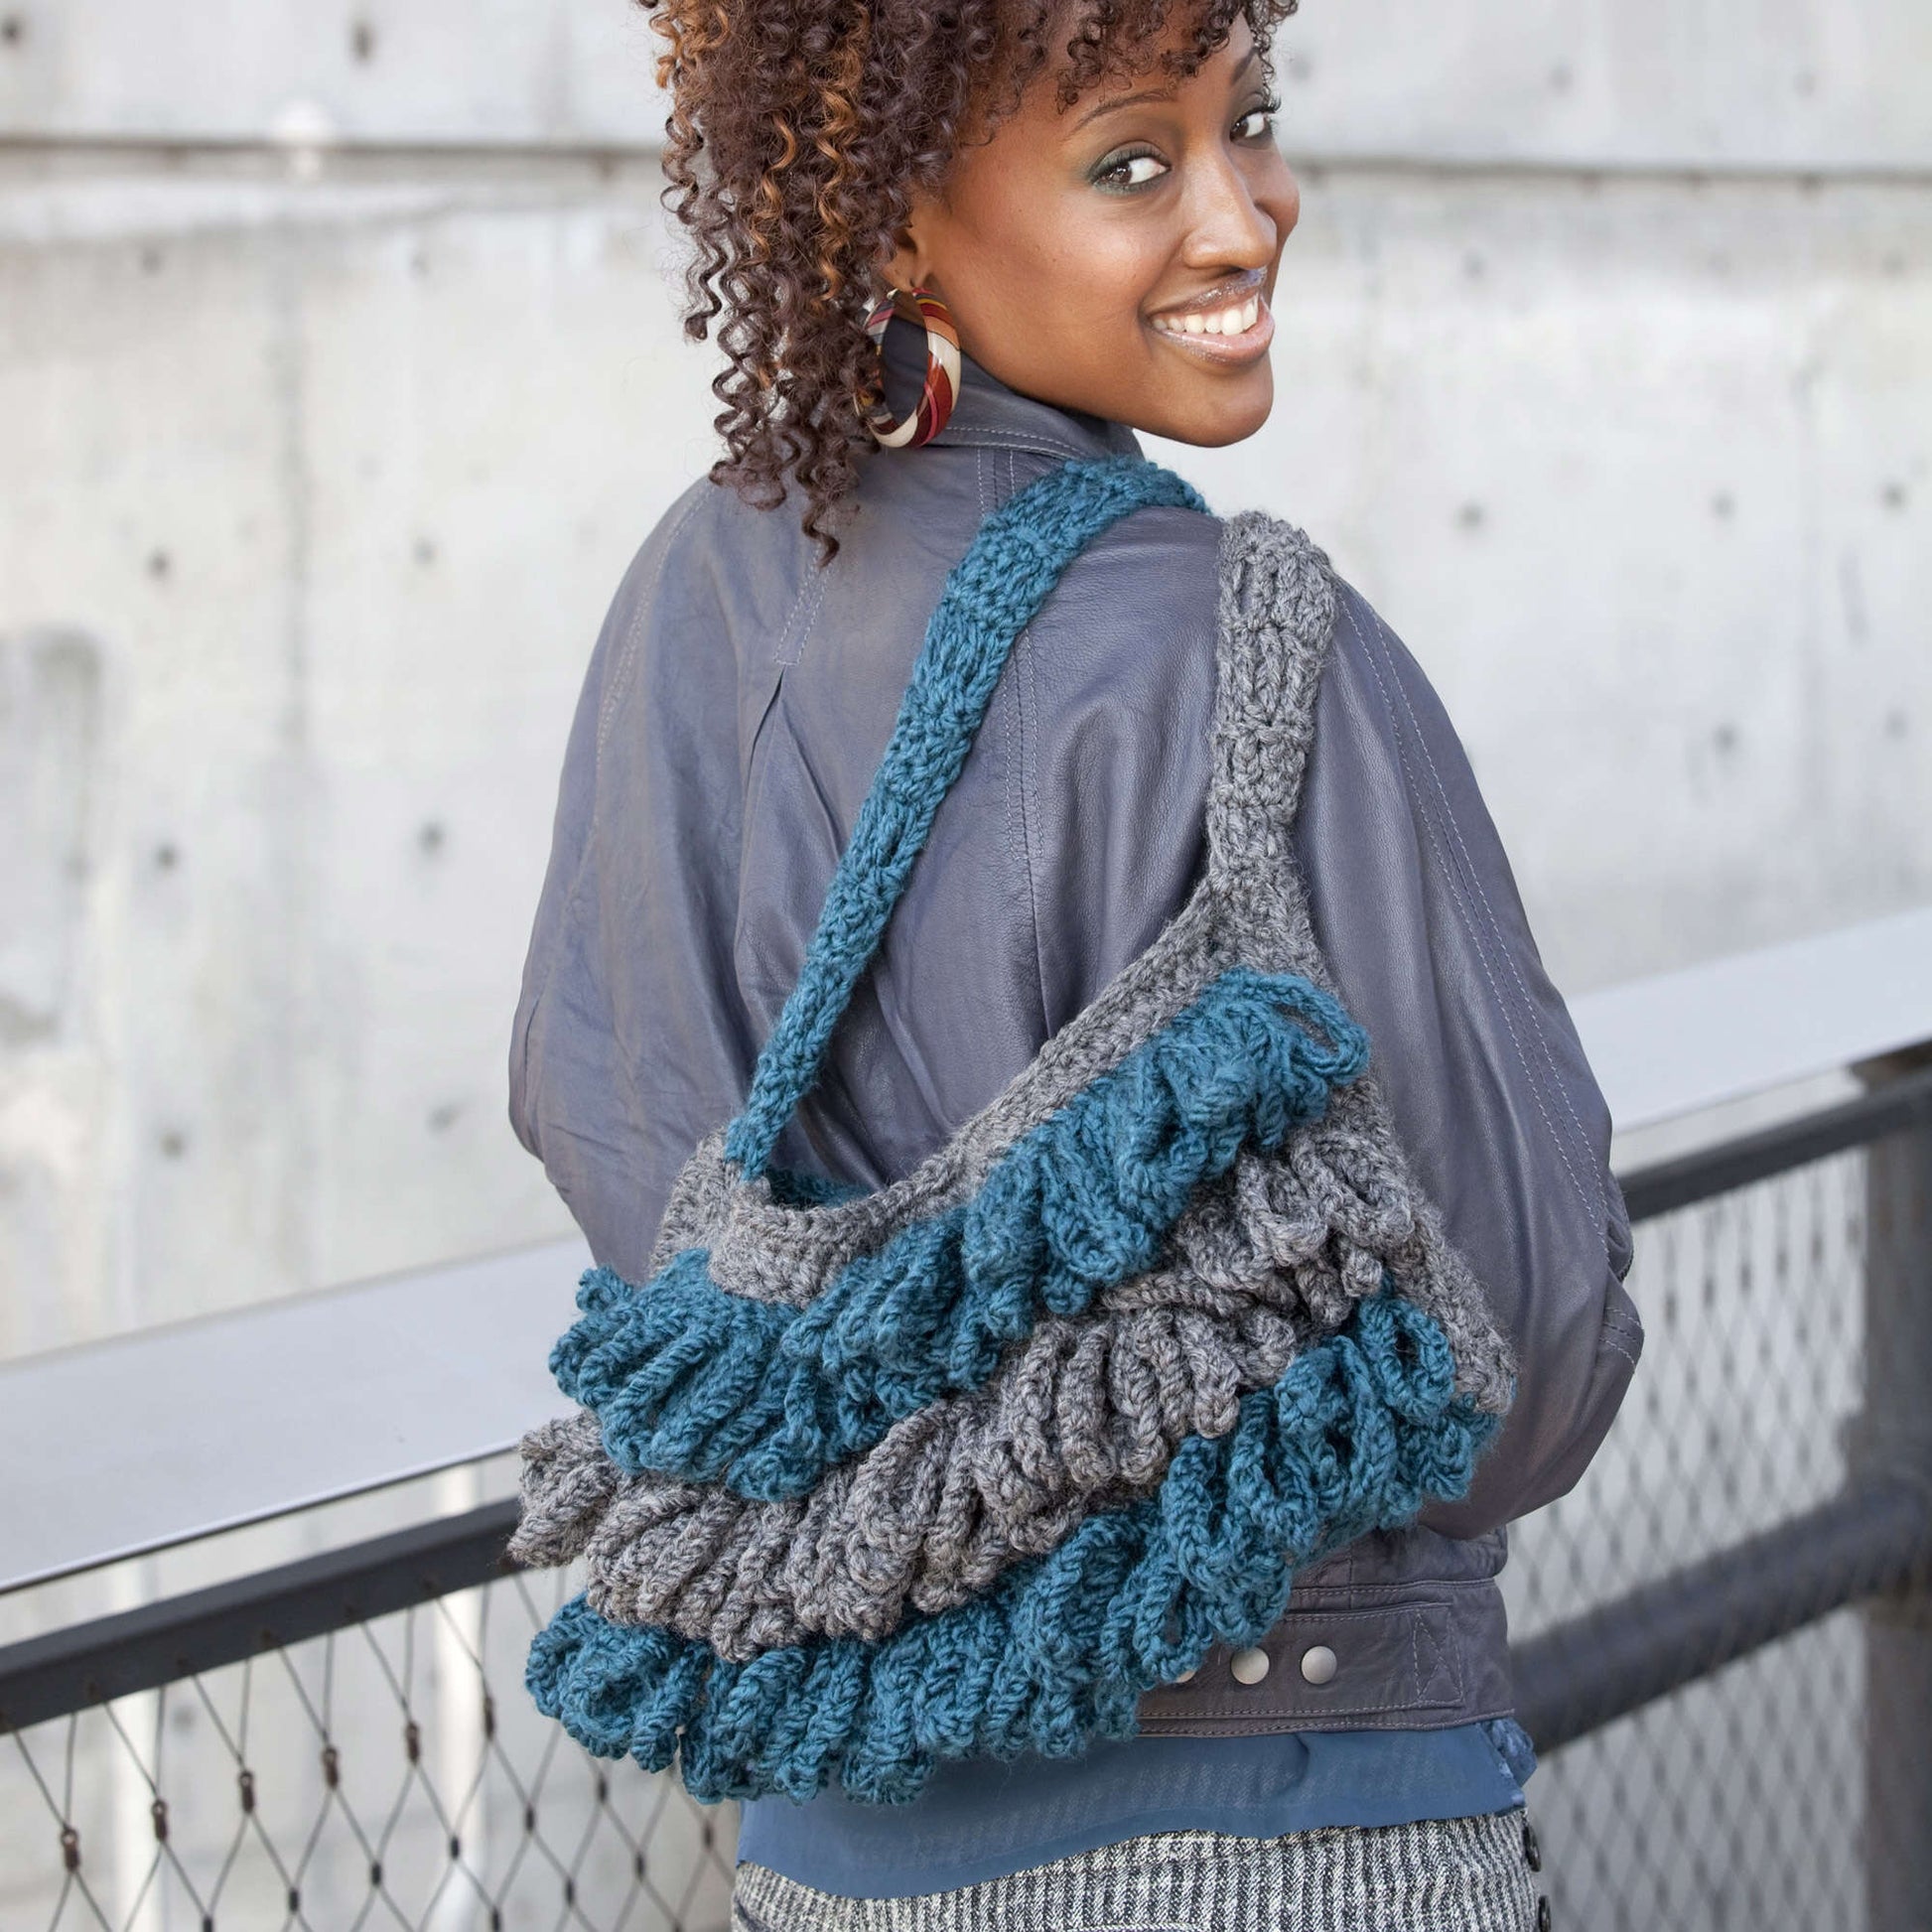 Crocheted Yarn Bag, Patterns